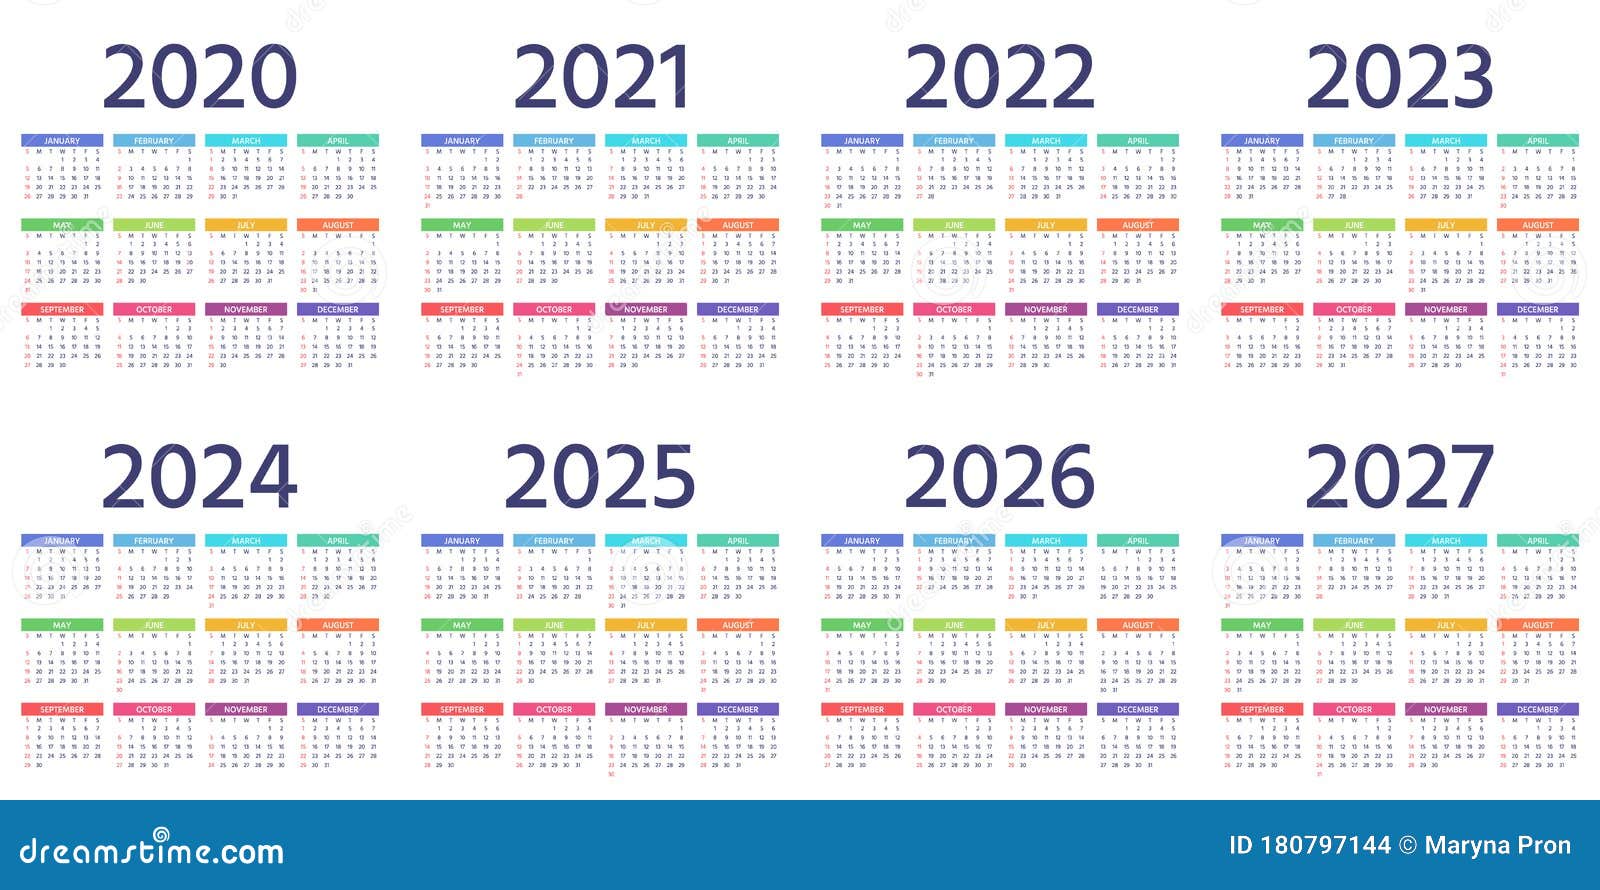 Крымский календарь на 2024 год. Календарь 2022 2023 2024. Календарь 2023 2024 2025 2026. Календарь 2021-2022. Календарь 2022-2023 год.